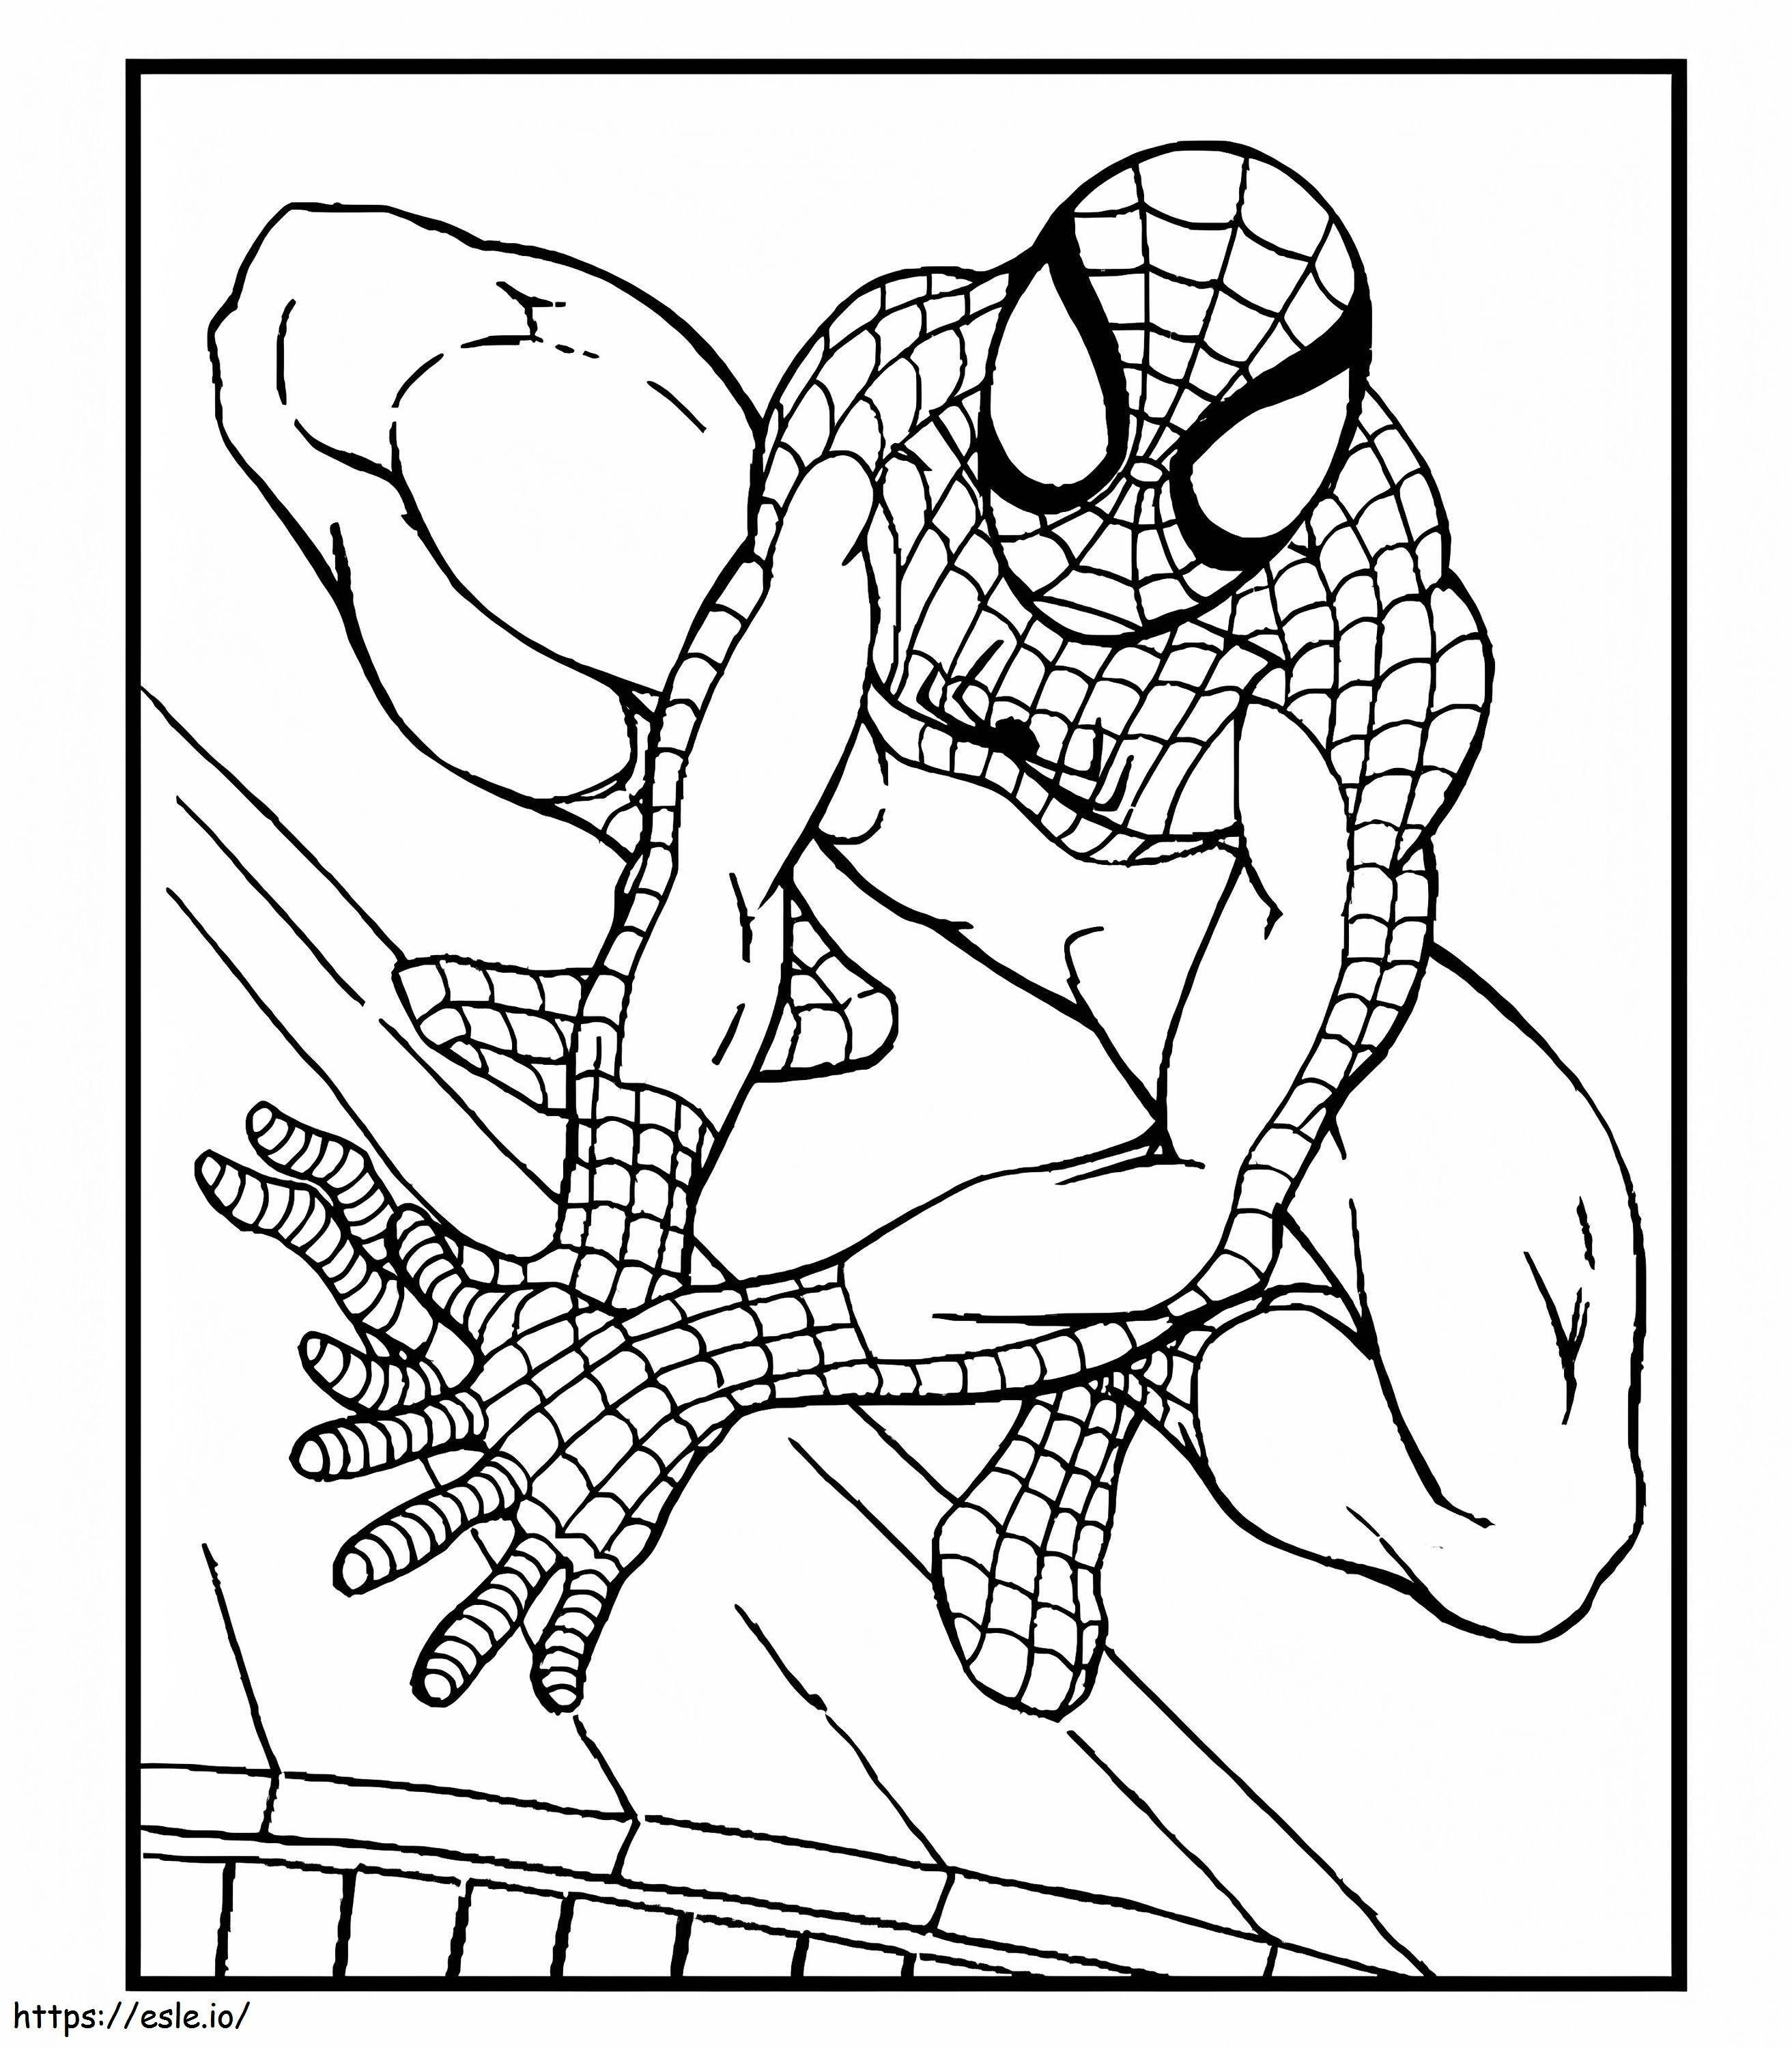 Superheld Spiderman ausmalbilder